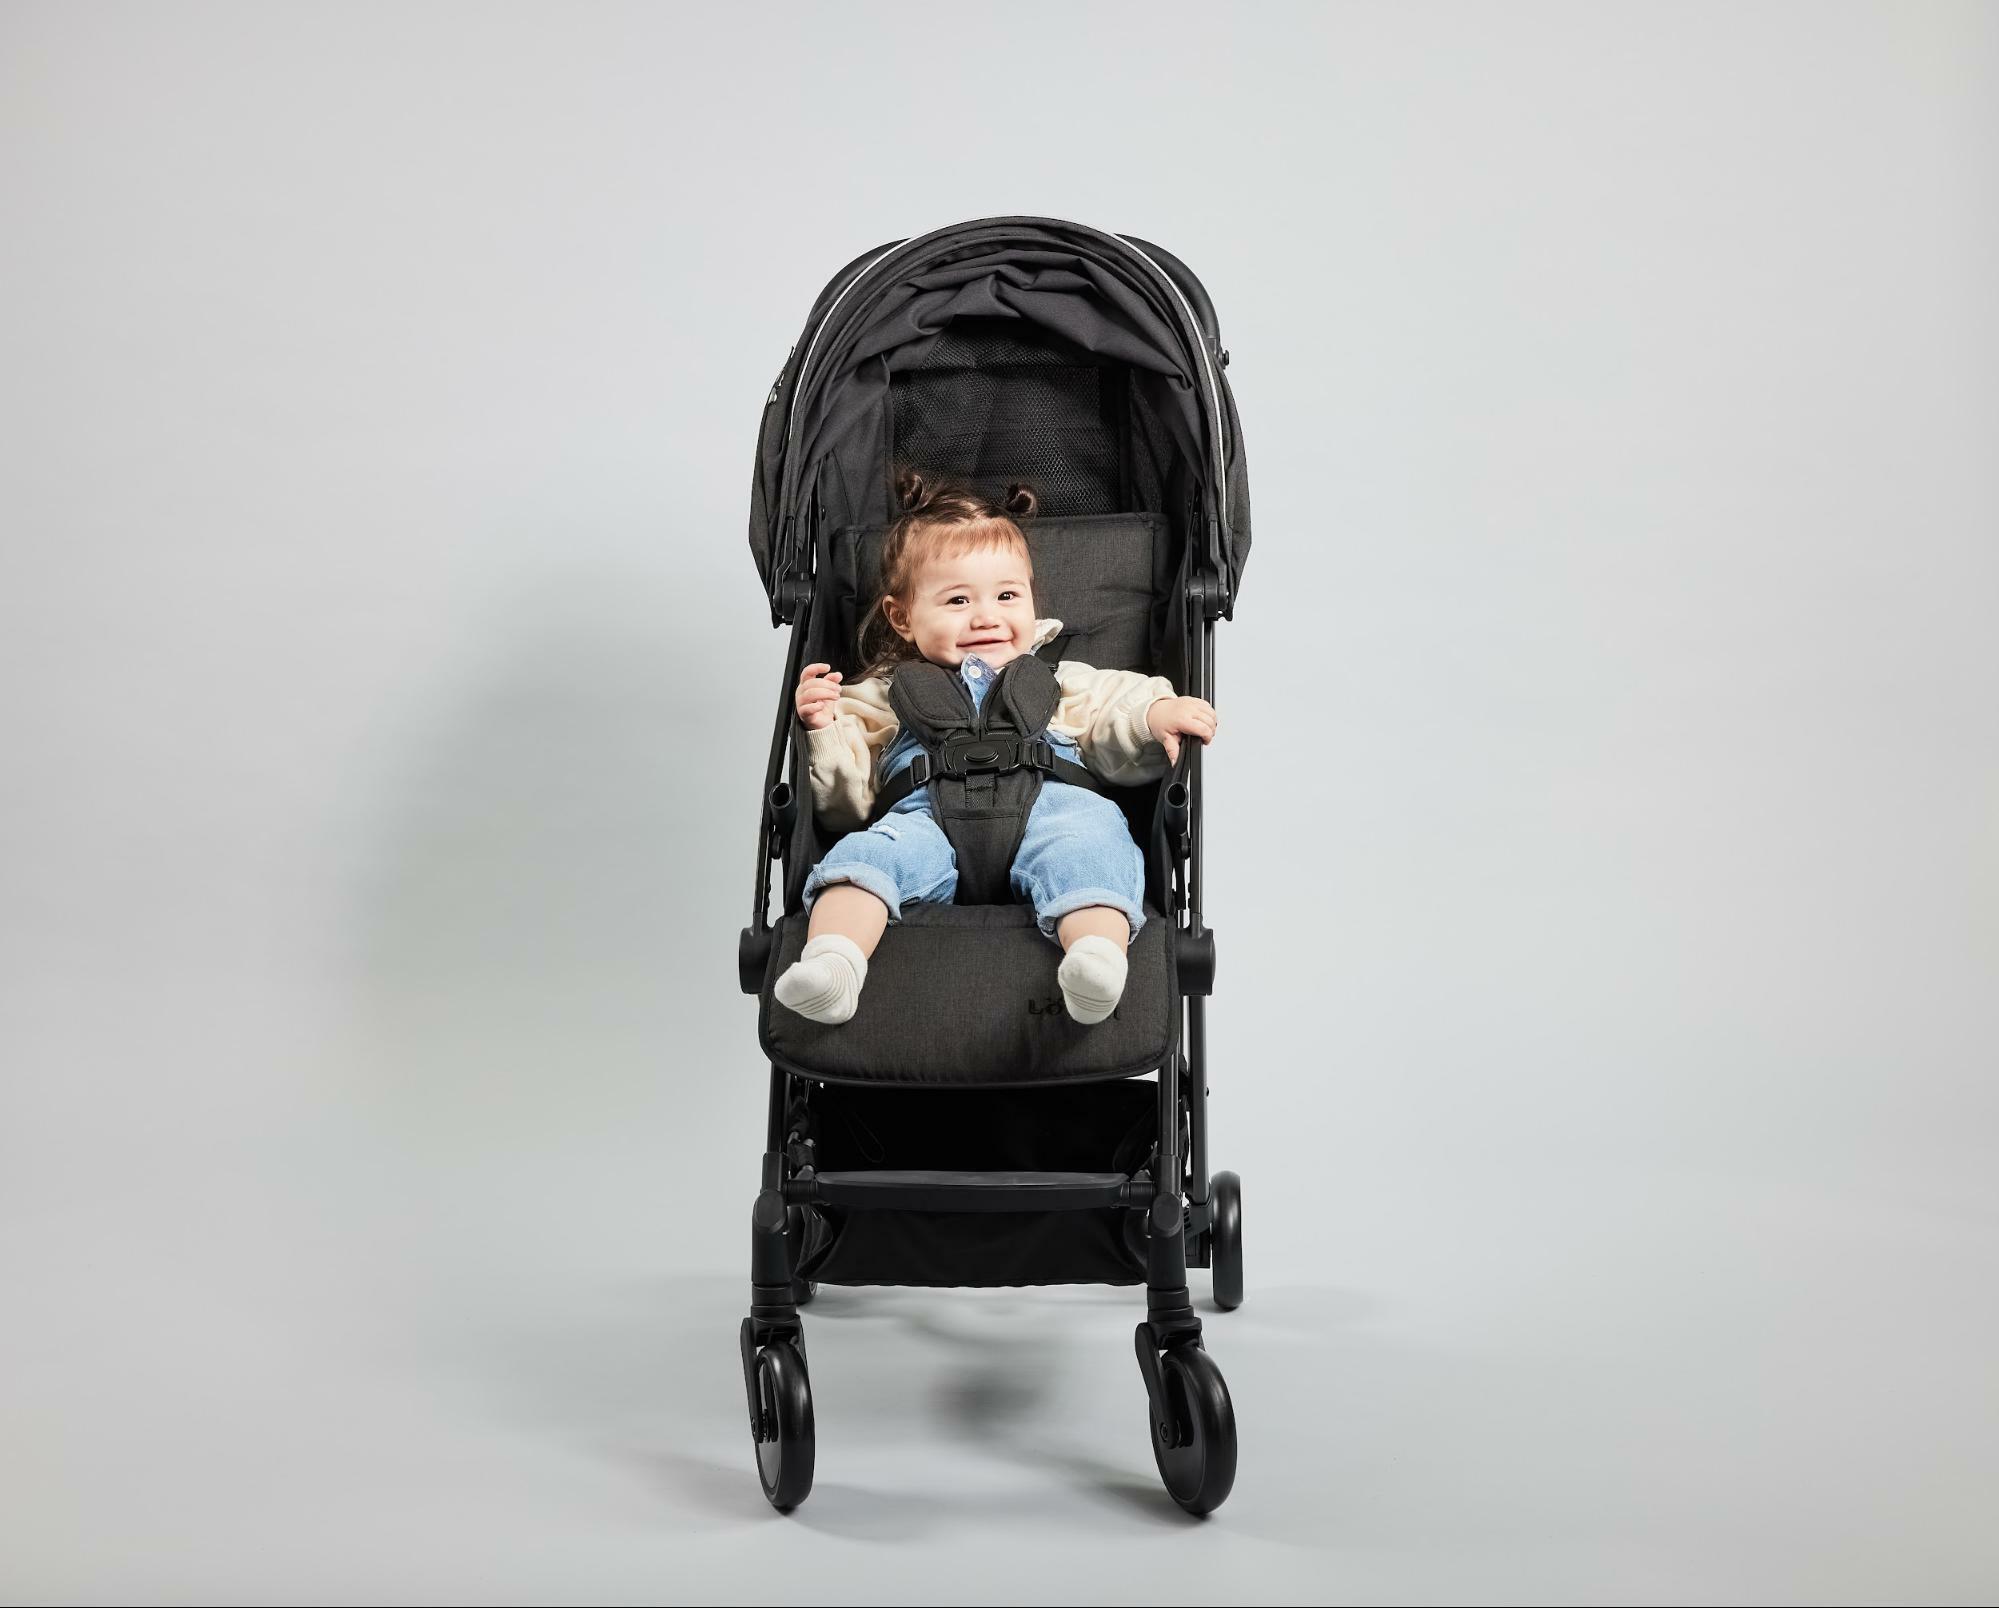 Affordable baby stroller recommendation: Banfubi GENIE light flagship baby stroller